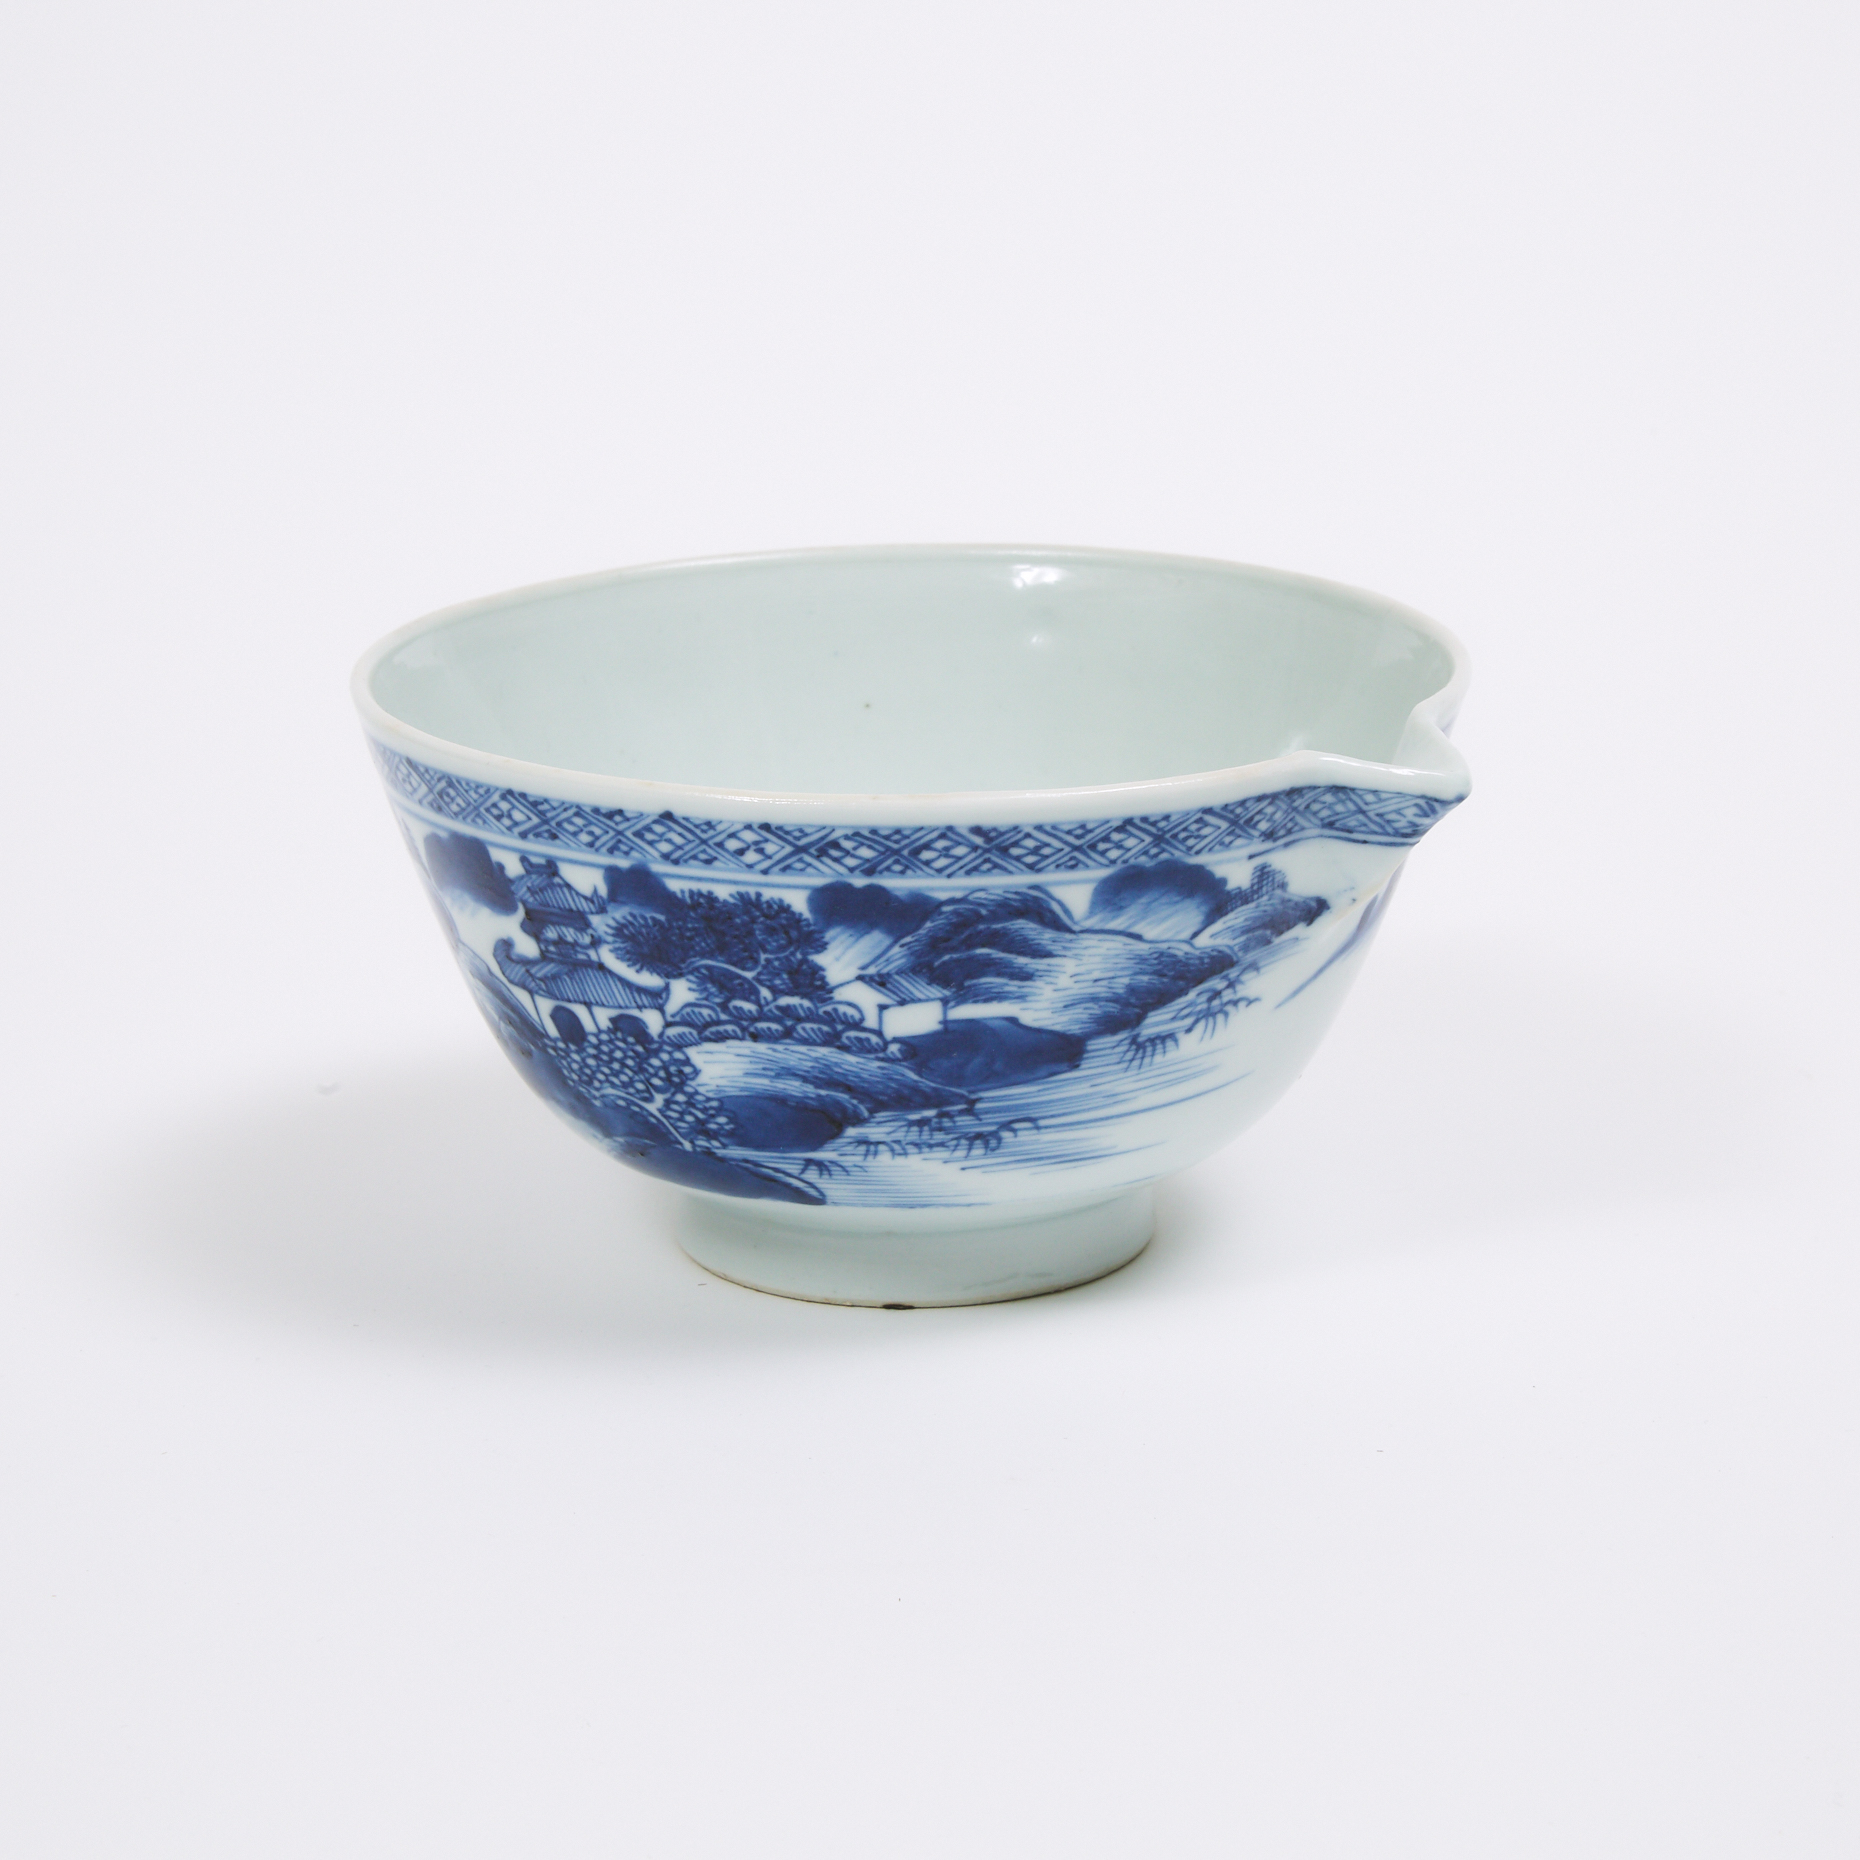 A Small Bowl-Shaped Jug from the Nanking Cargo, Qianlong Period, Circa 1750